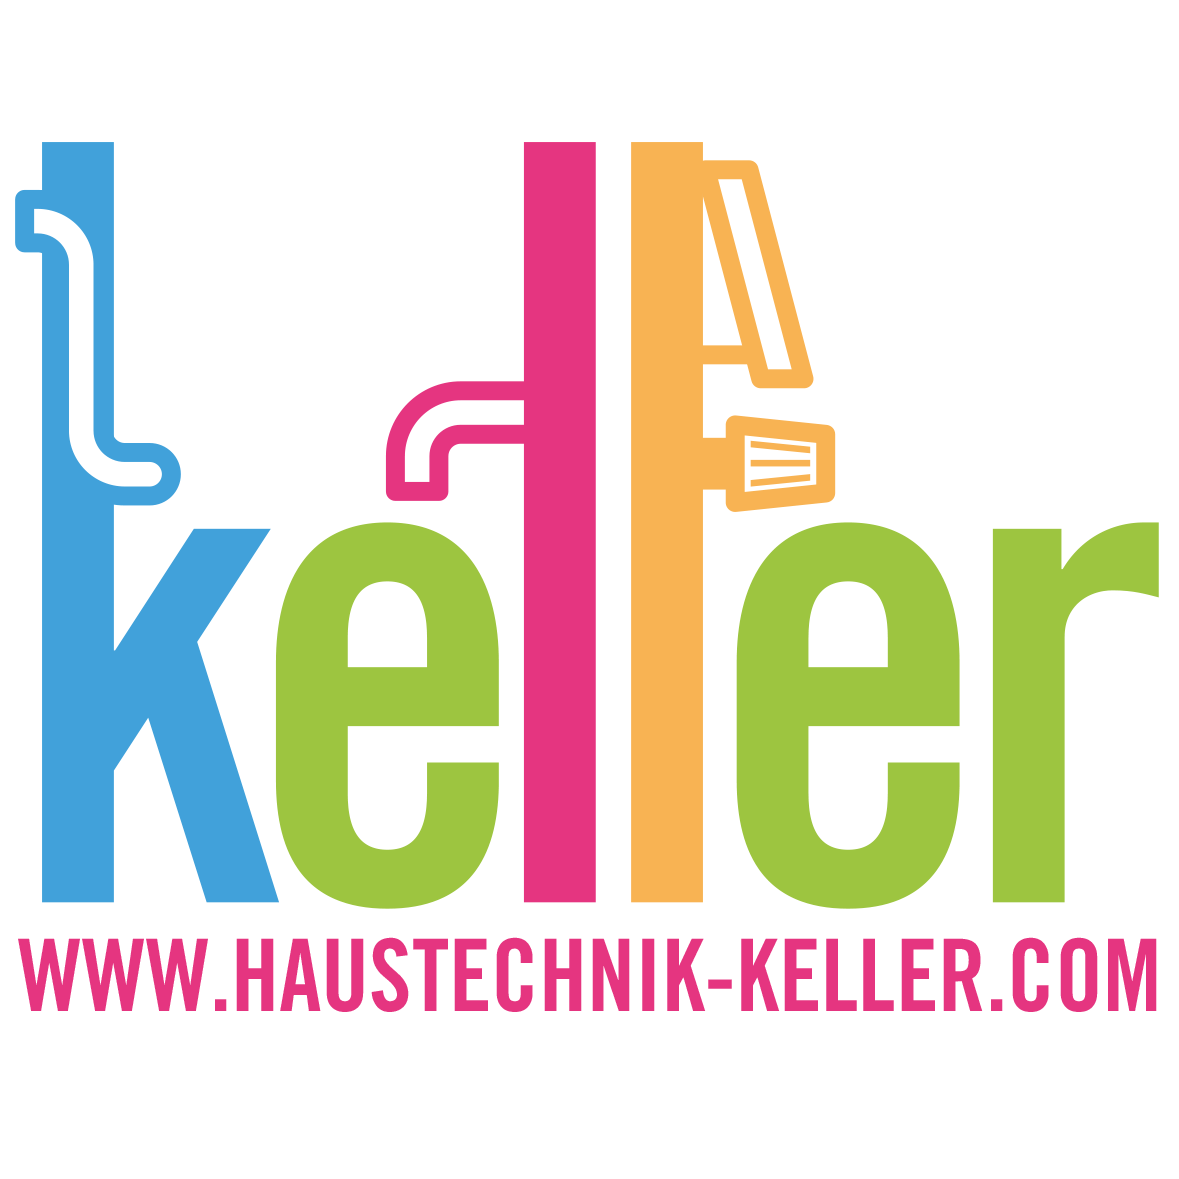 Haustechnik Keller in Sulzthal - Logo